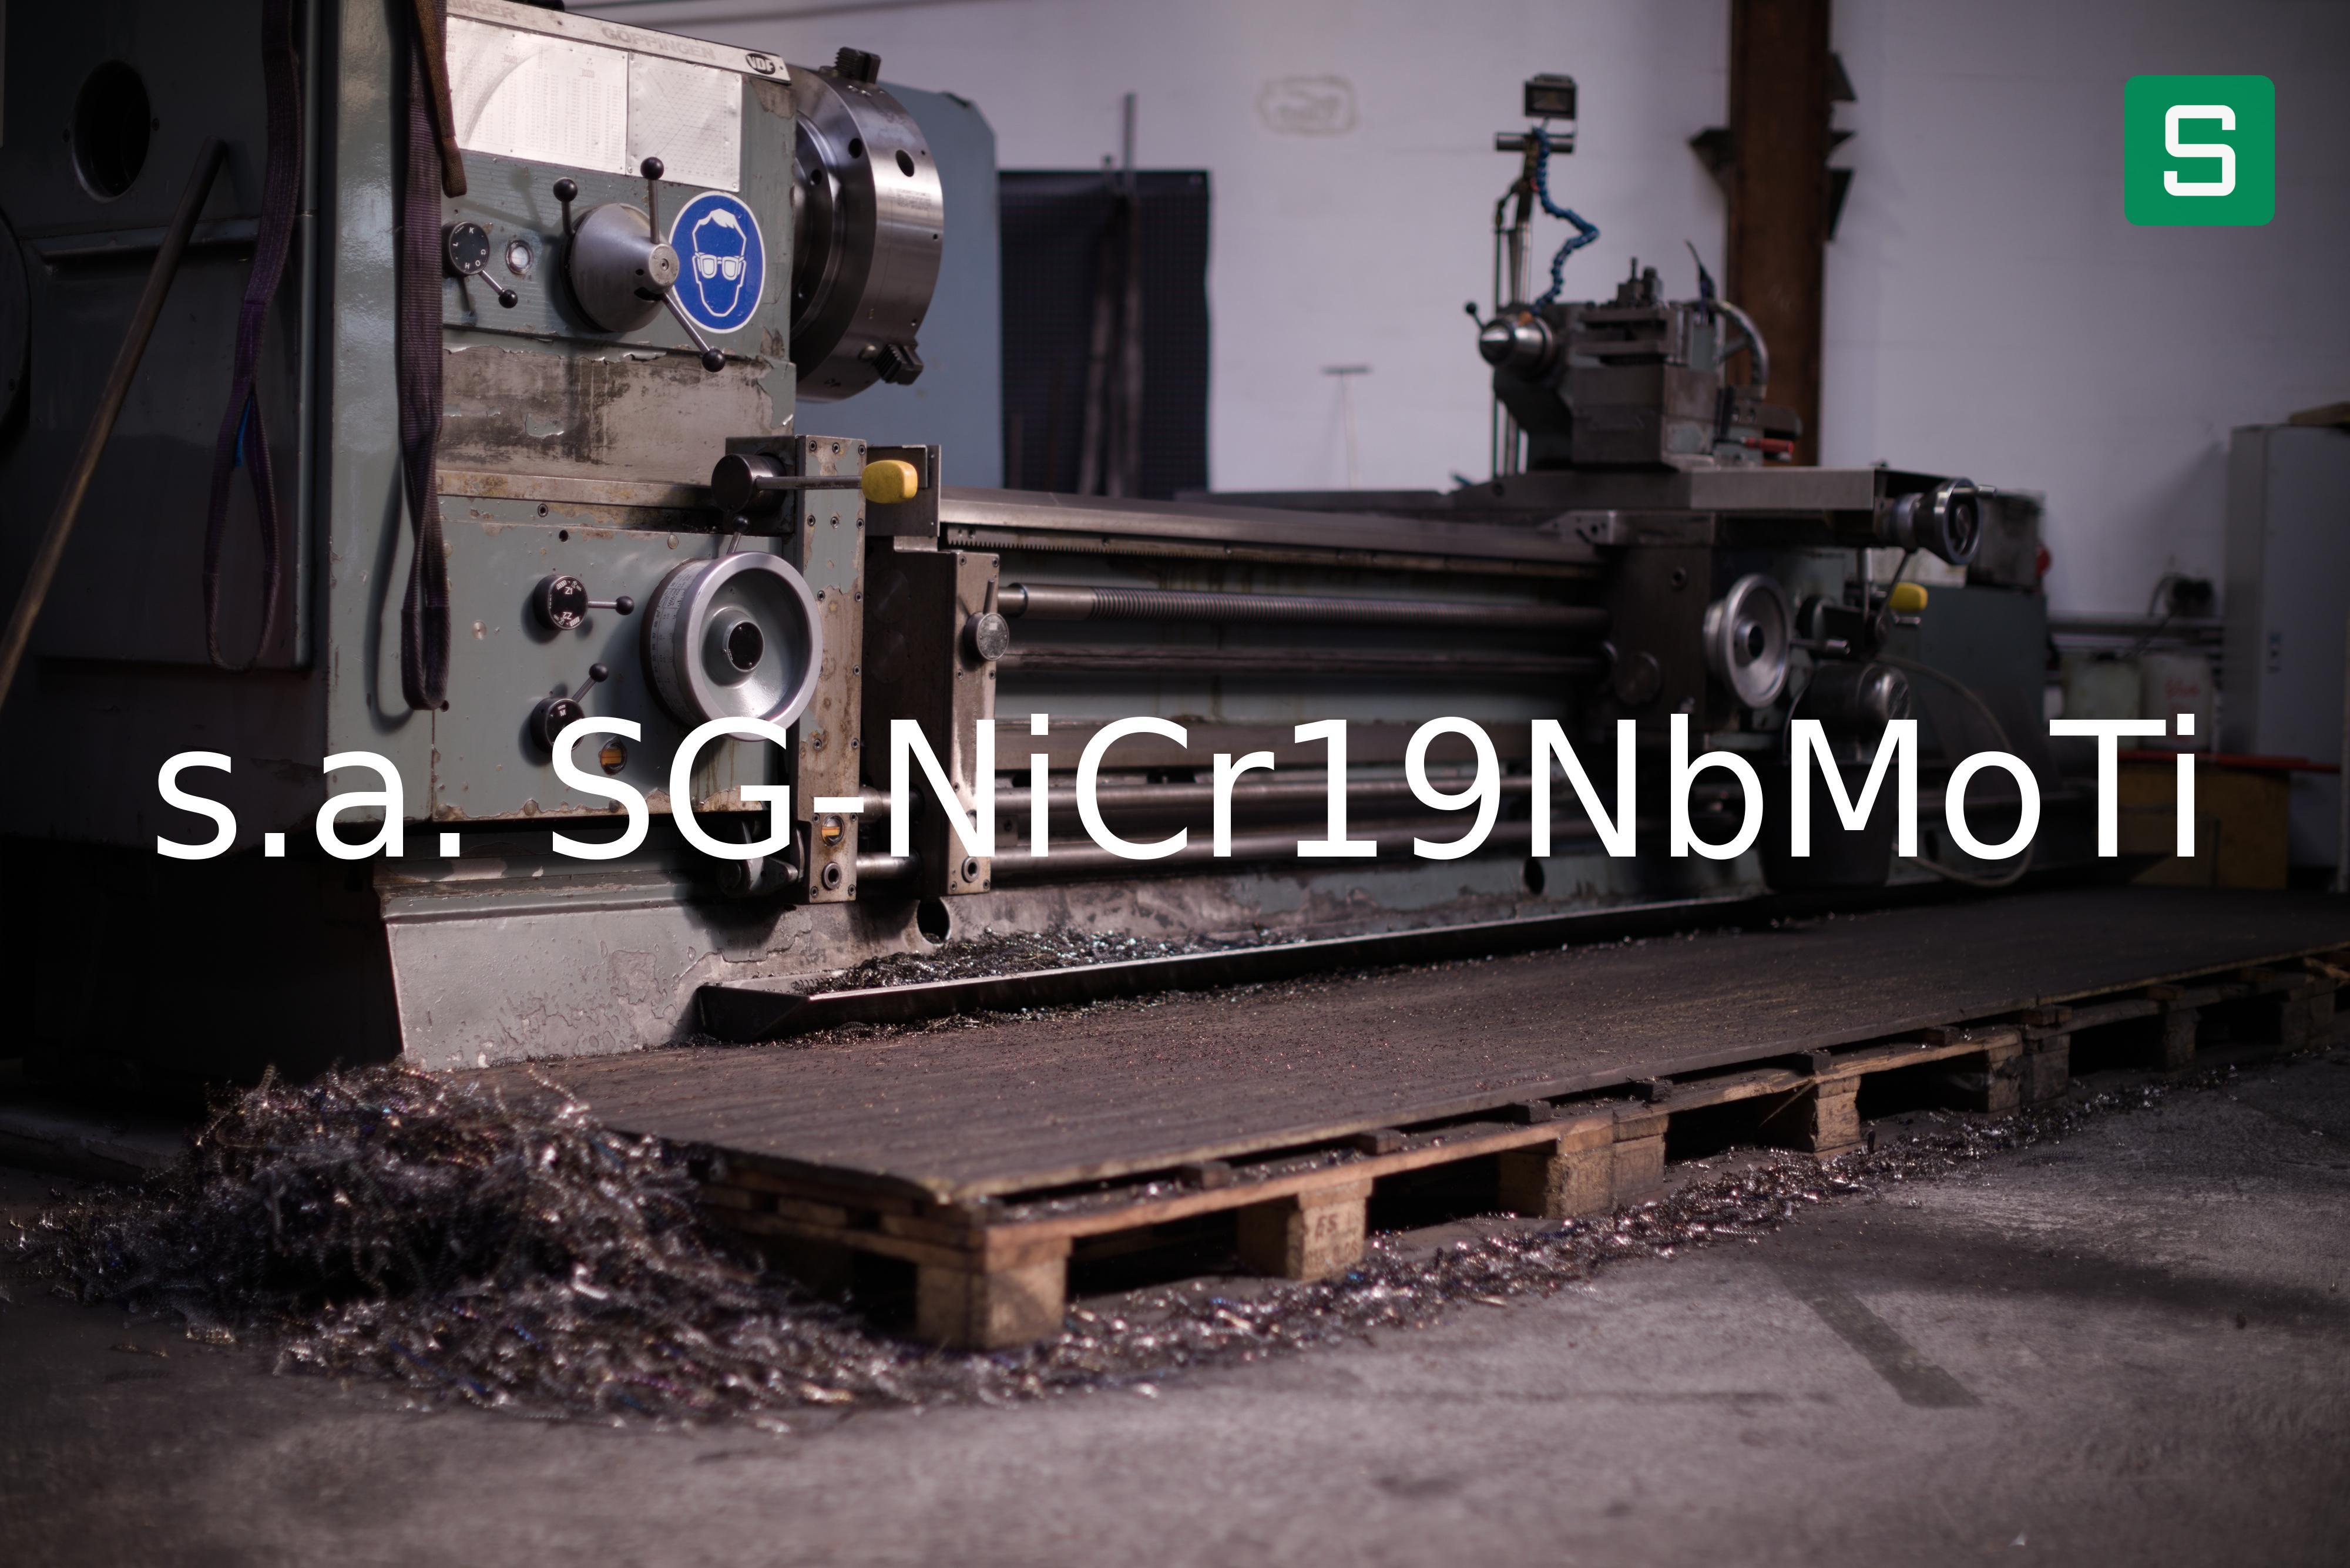 Steel Material: s.a. SG-NiCr19NbMoTi